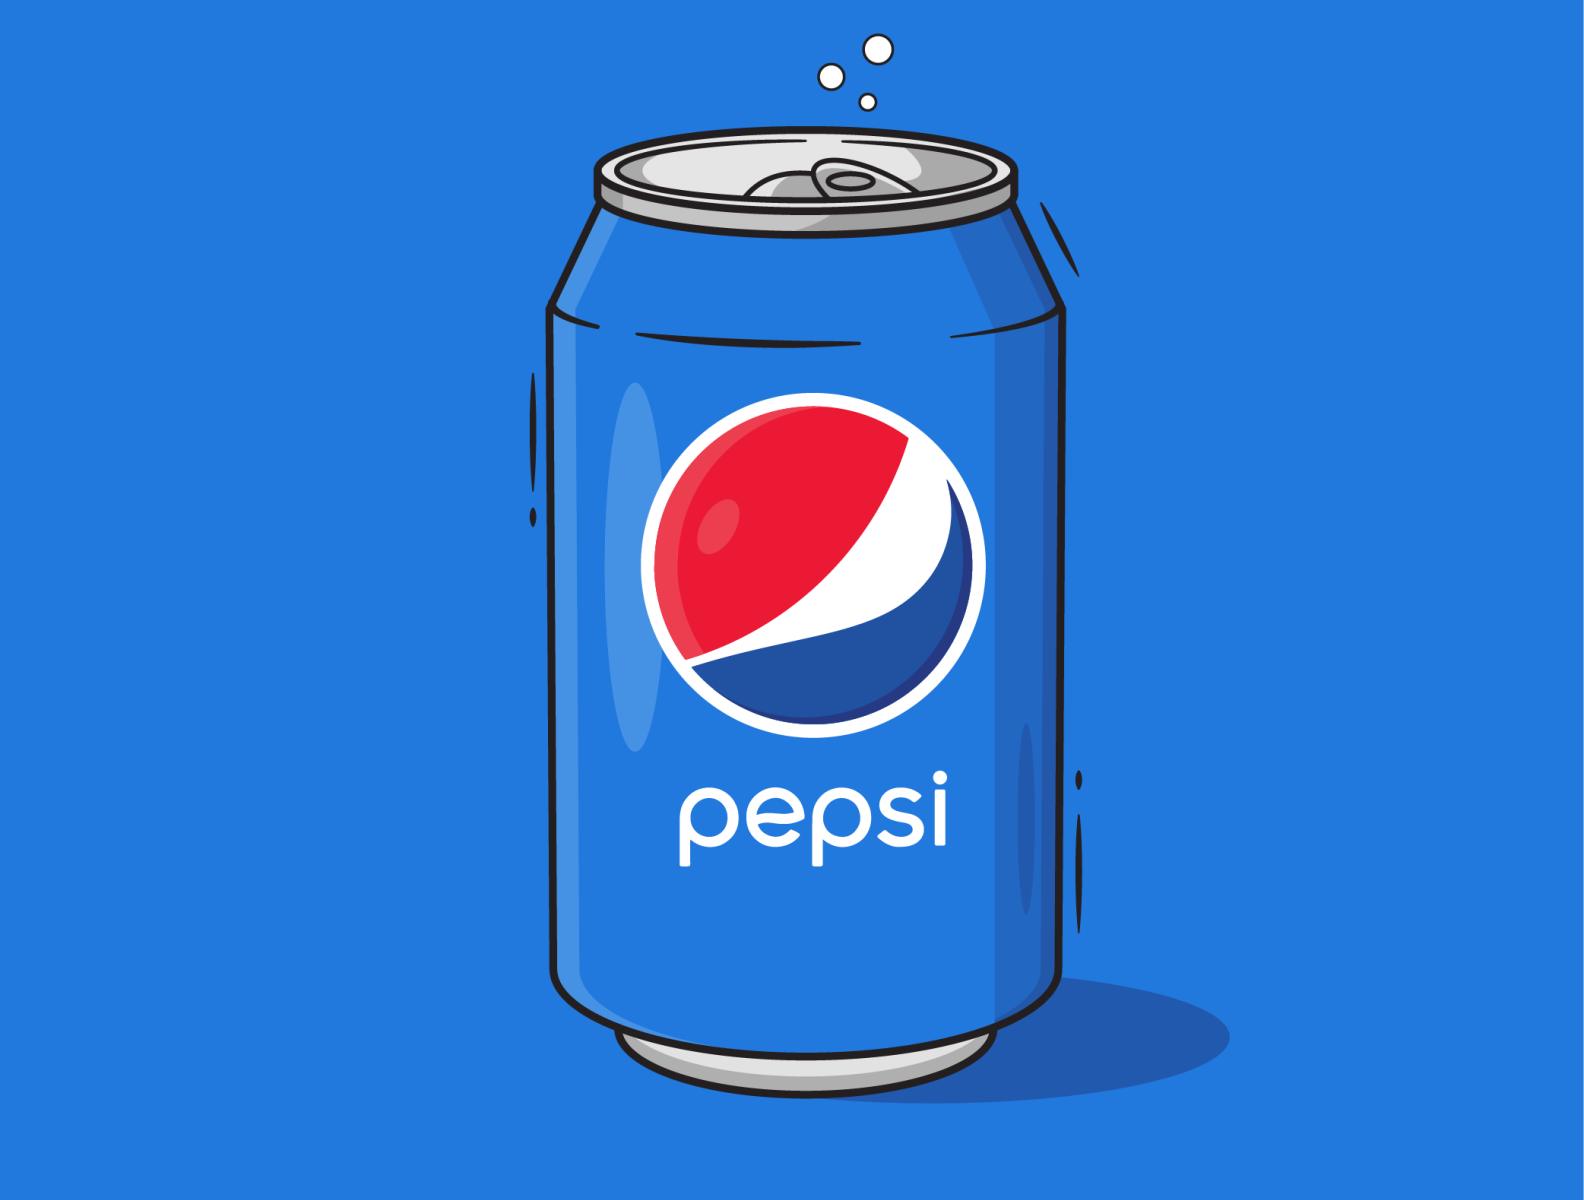 Pepsi Soda Can Illustration by Christopher Balogun on Dribbble